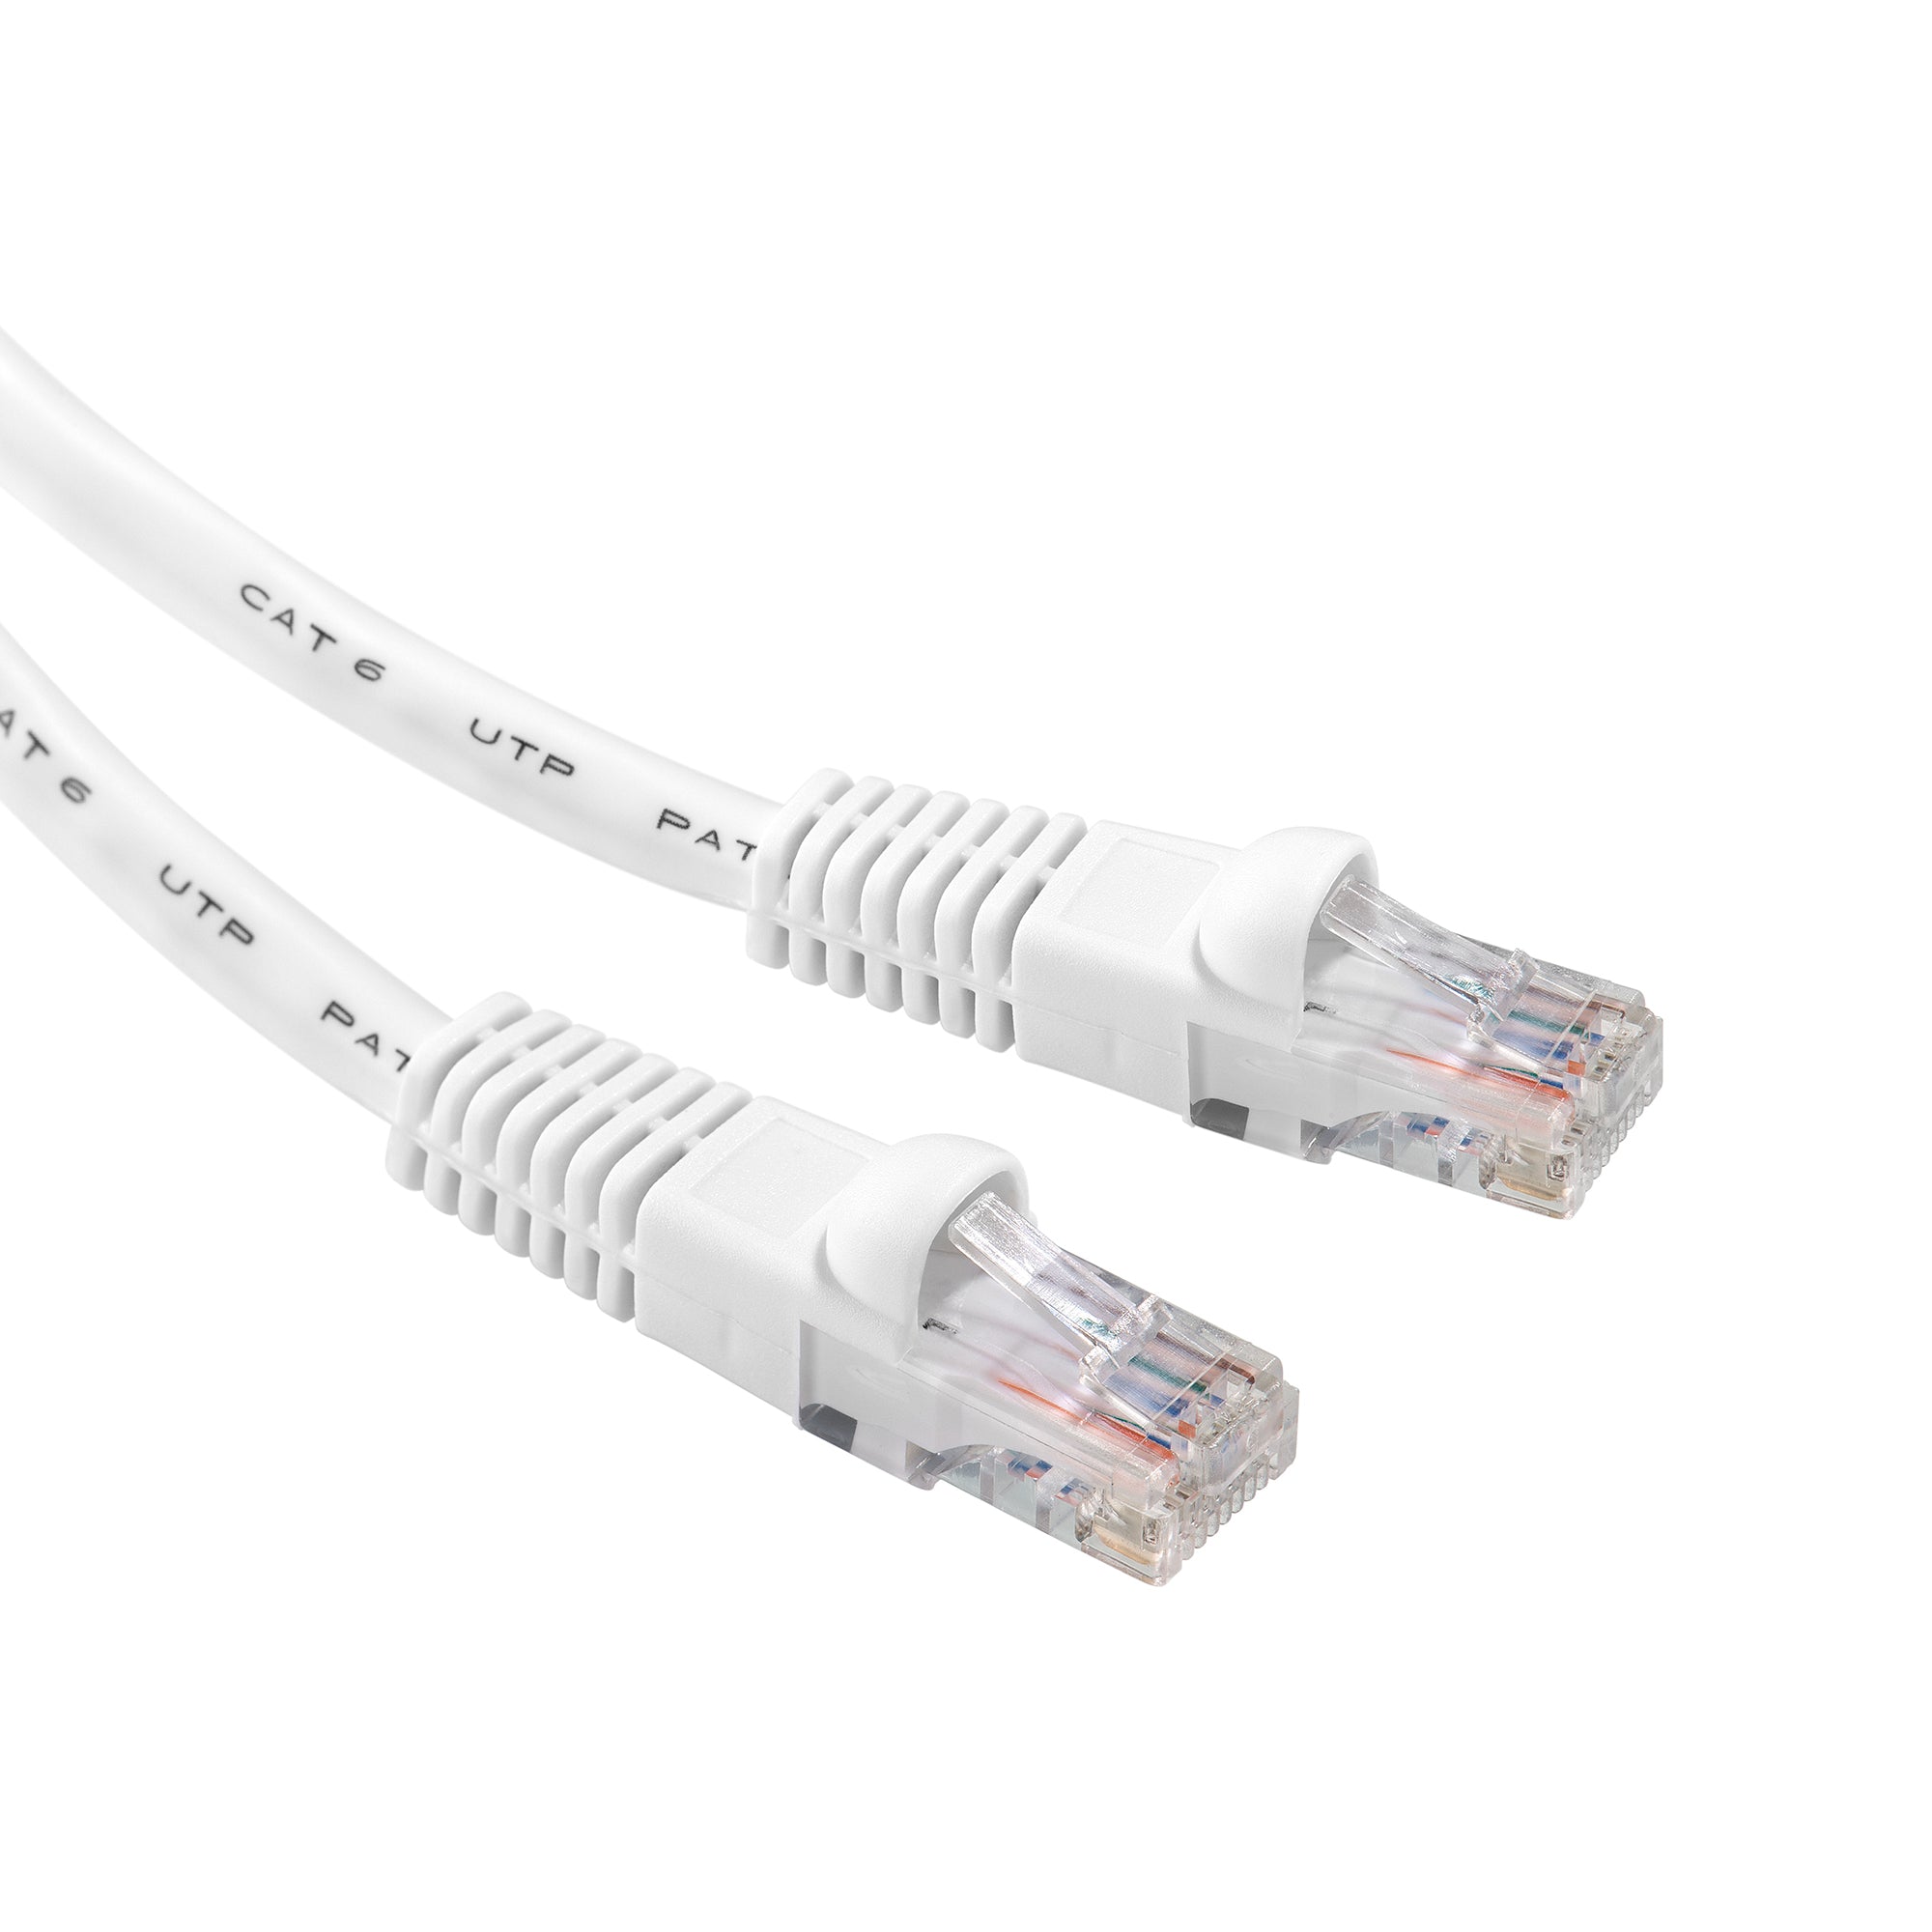 Terabyte CAT6E 3m LAN Cable for Modem, Personal Computer, Laptop